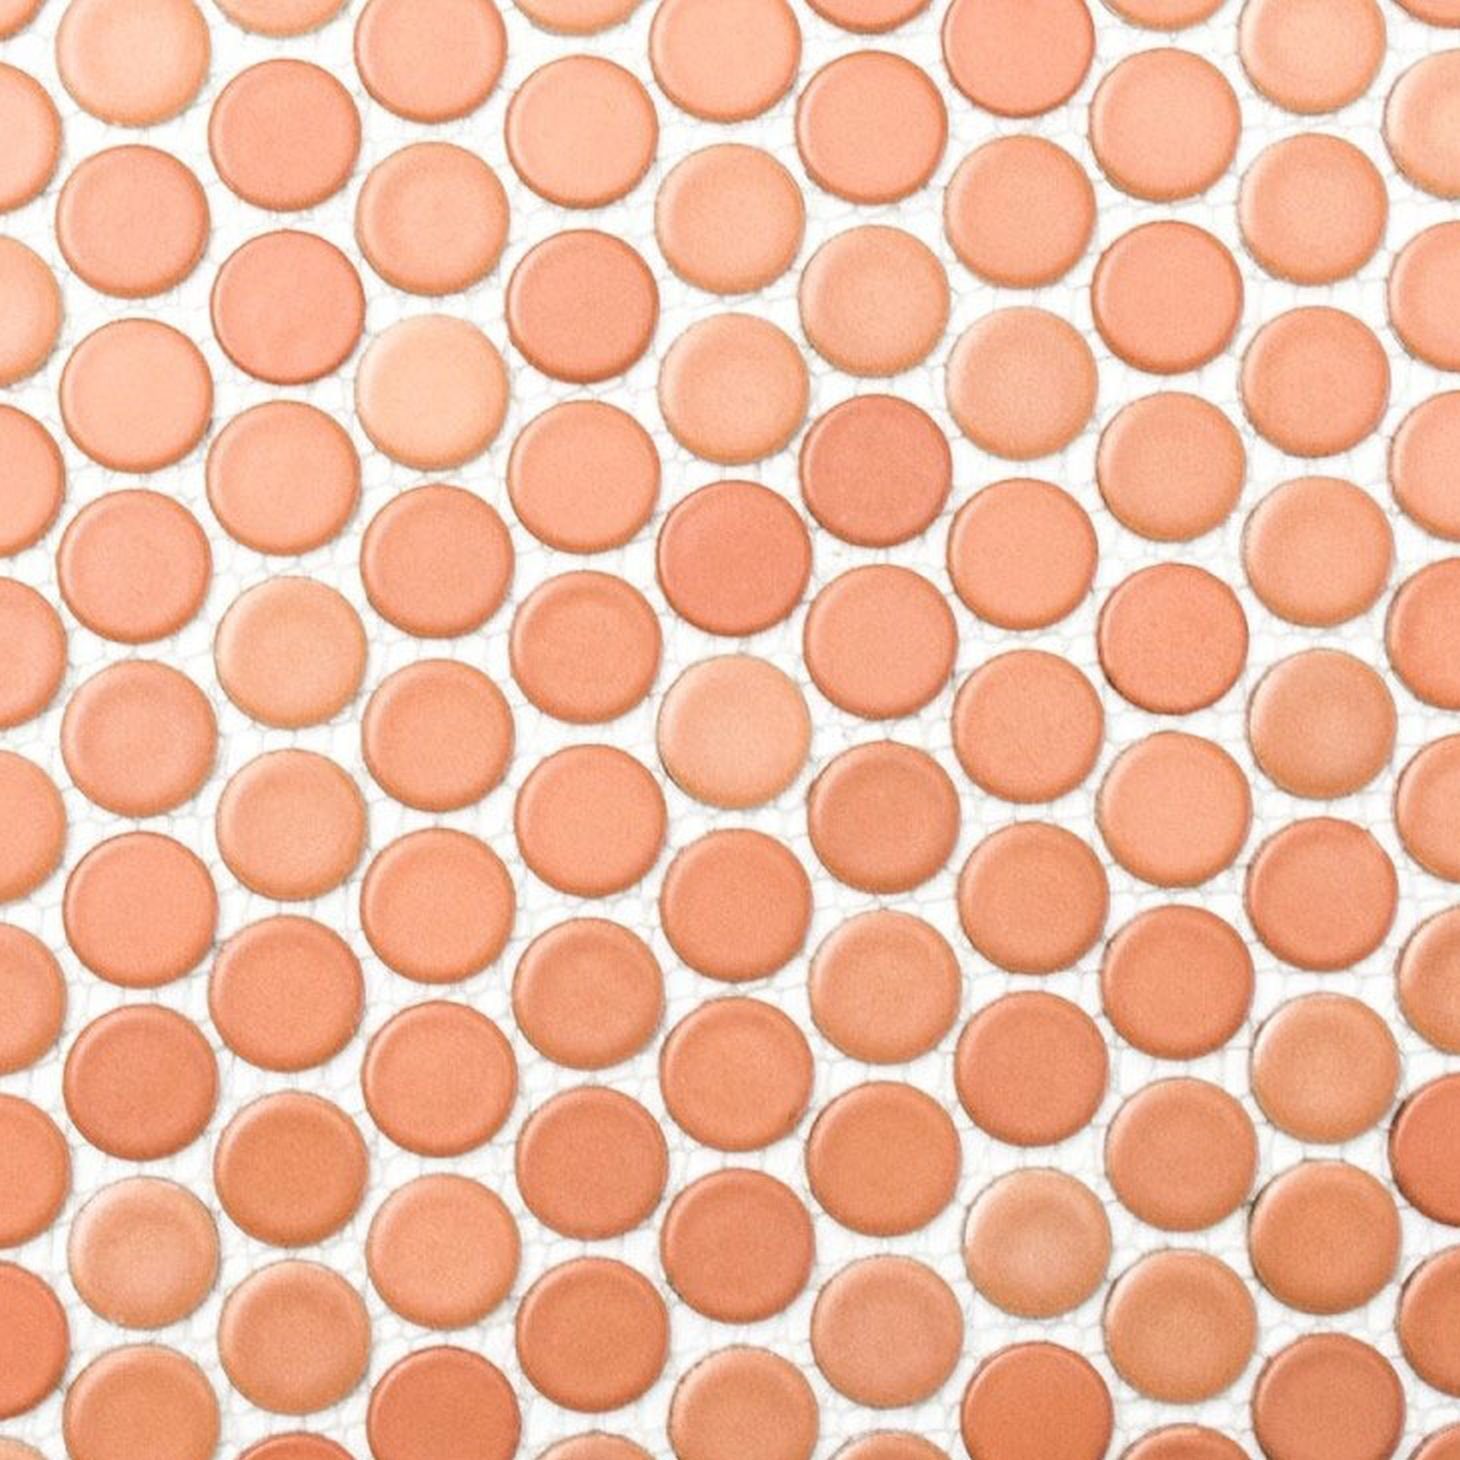 Küche rotbraun Rundmosaik Mosani Dusche Wand Mosaikfliesen LOOP Knopfmosaik terrakotta